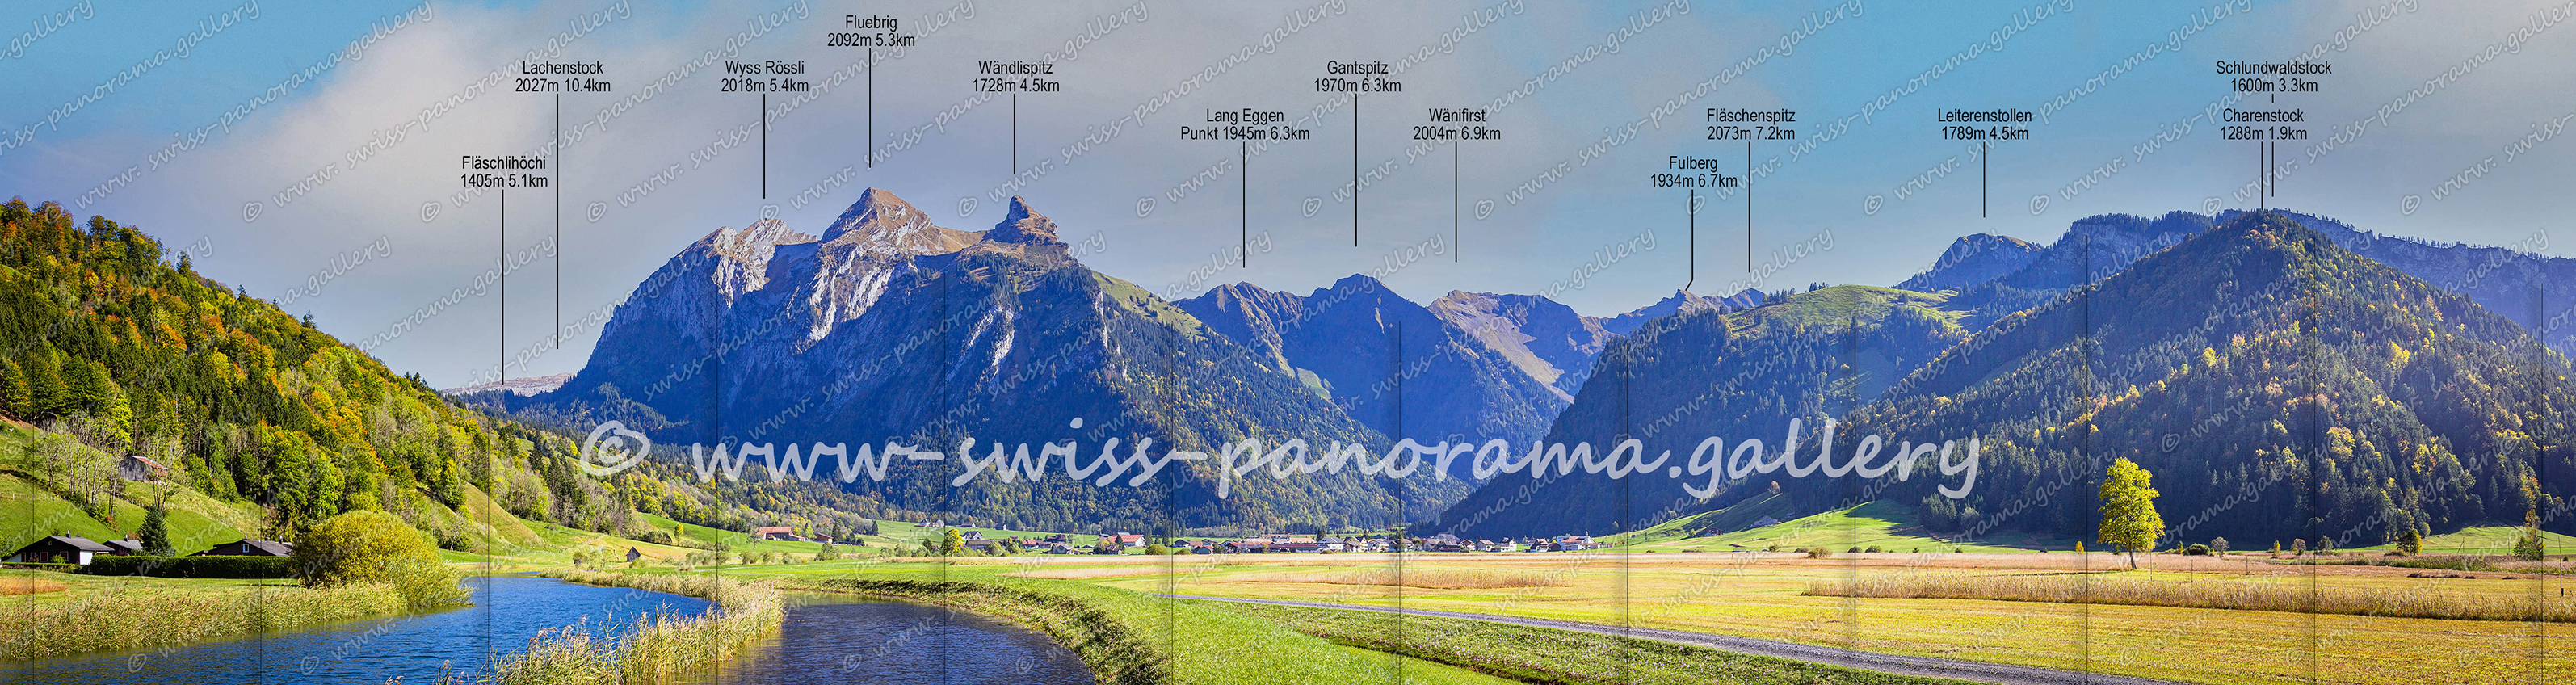 Panorama Euthal swiss-panorama.gallery Schweizer Alpenpanorama